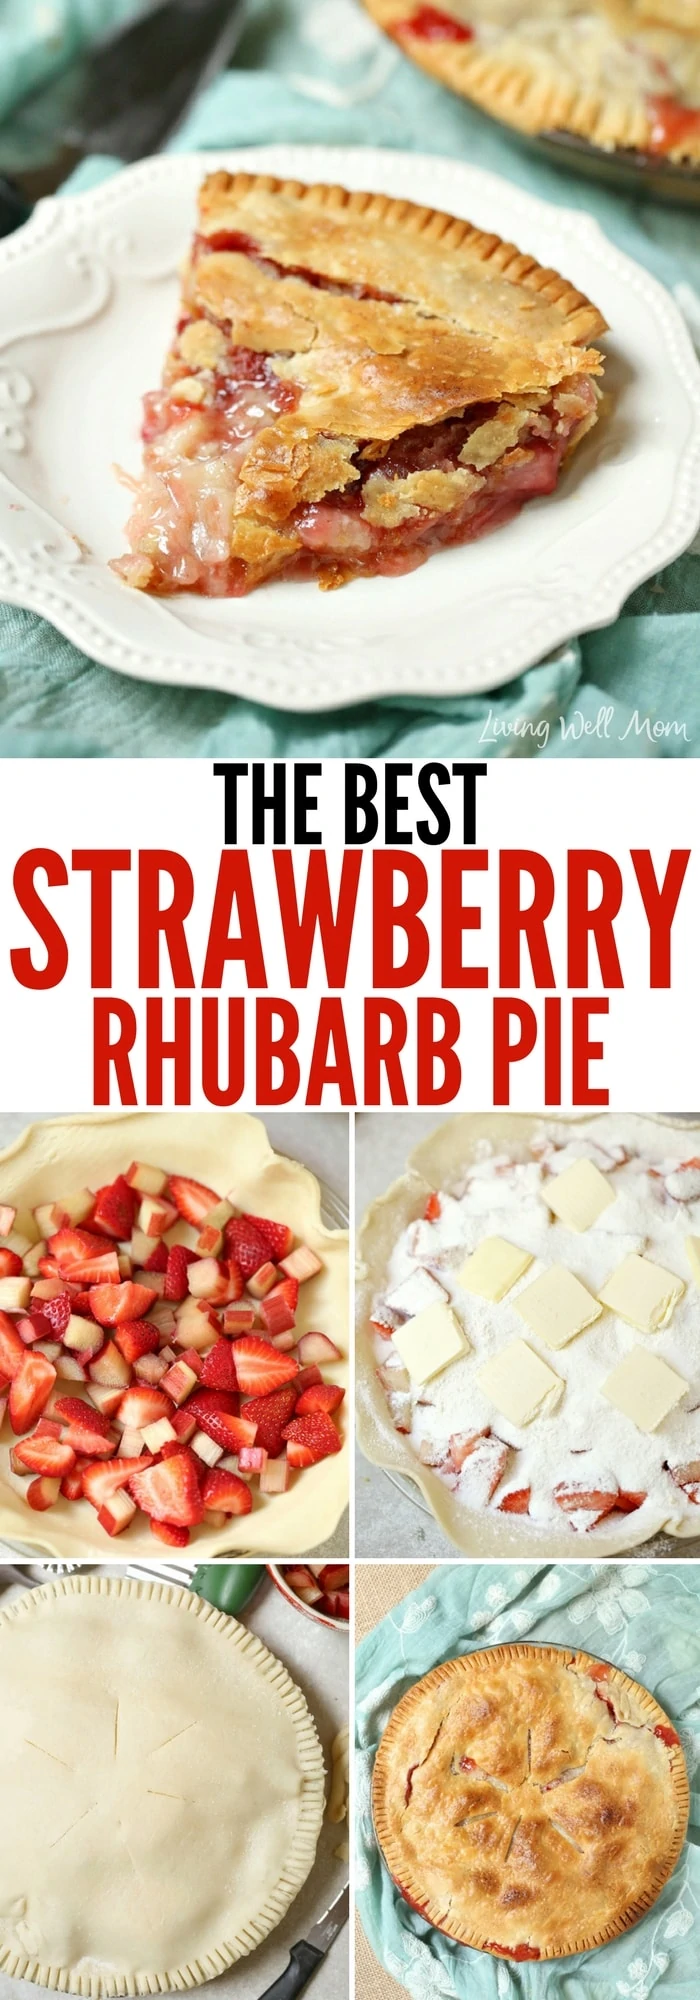 the best strawberry rhubarb pie pinterest collage